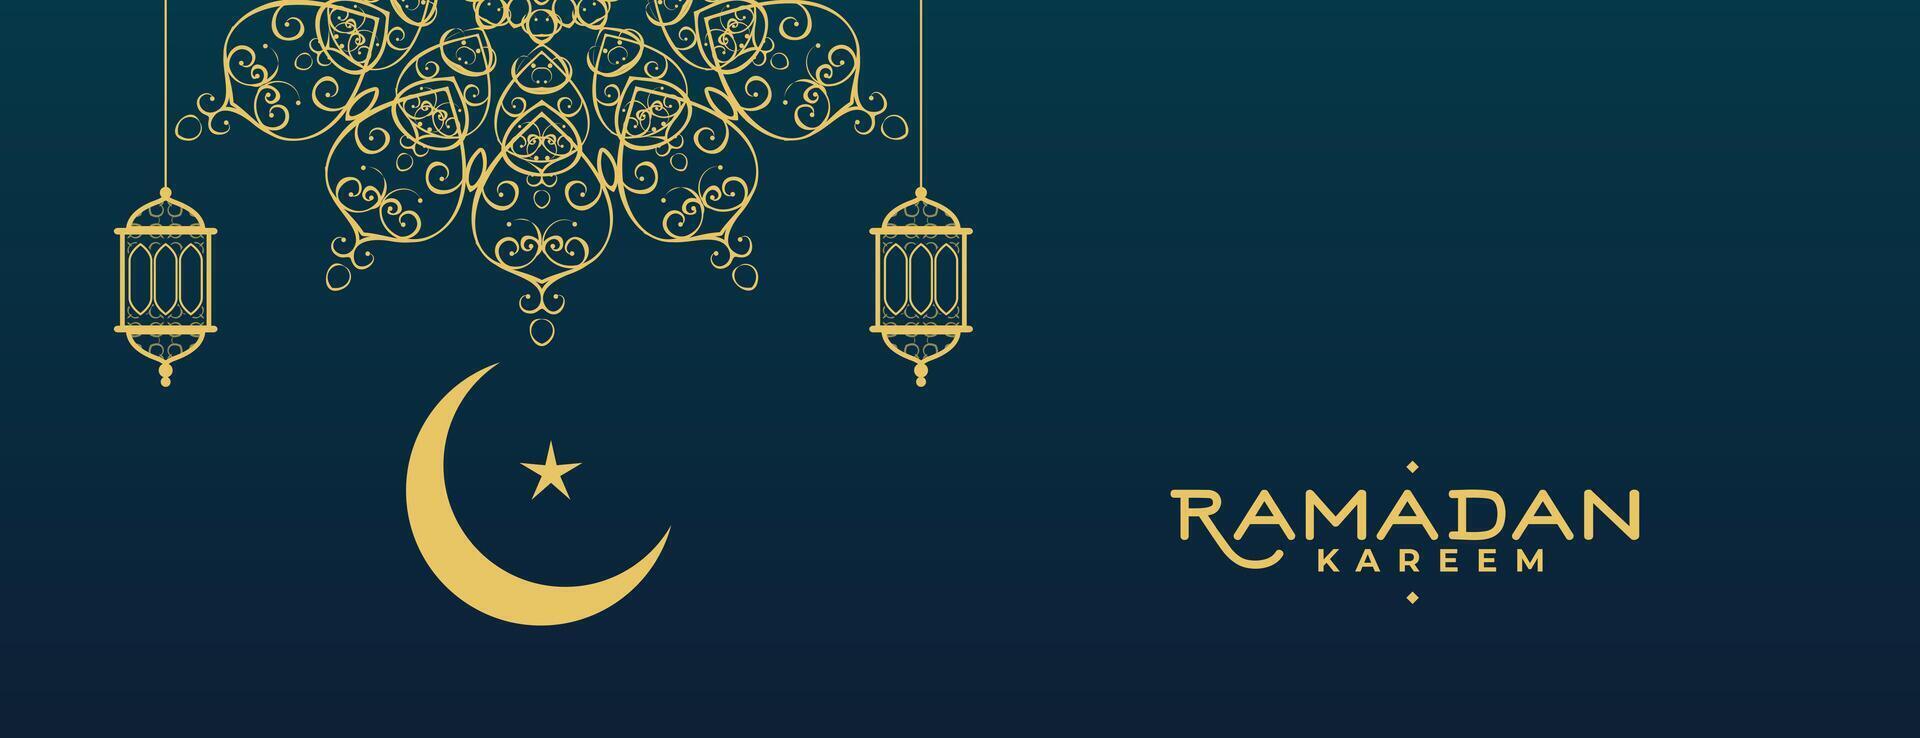 Ramadan kareem decoratief mandala banier in vlak stijl vector